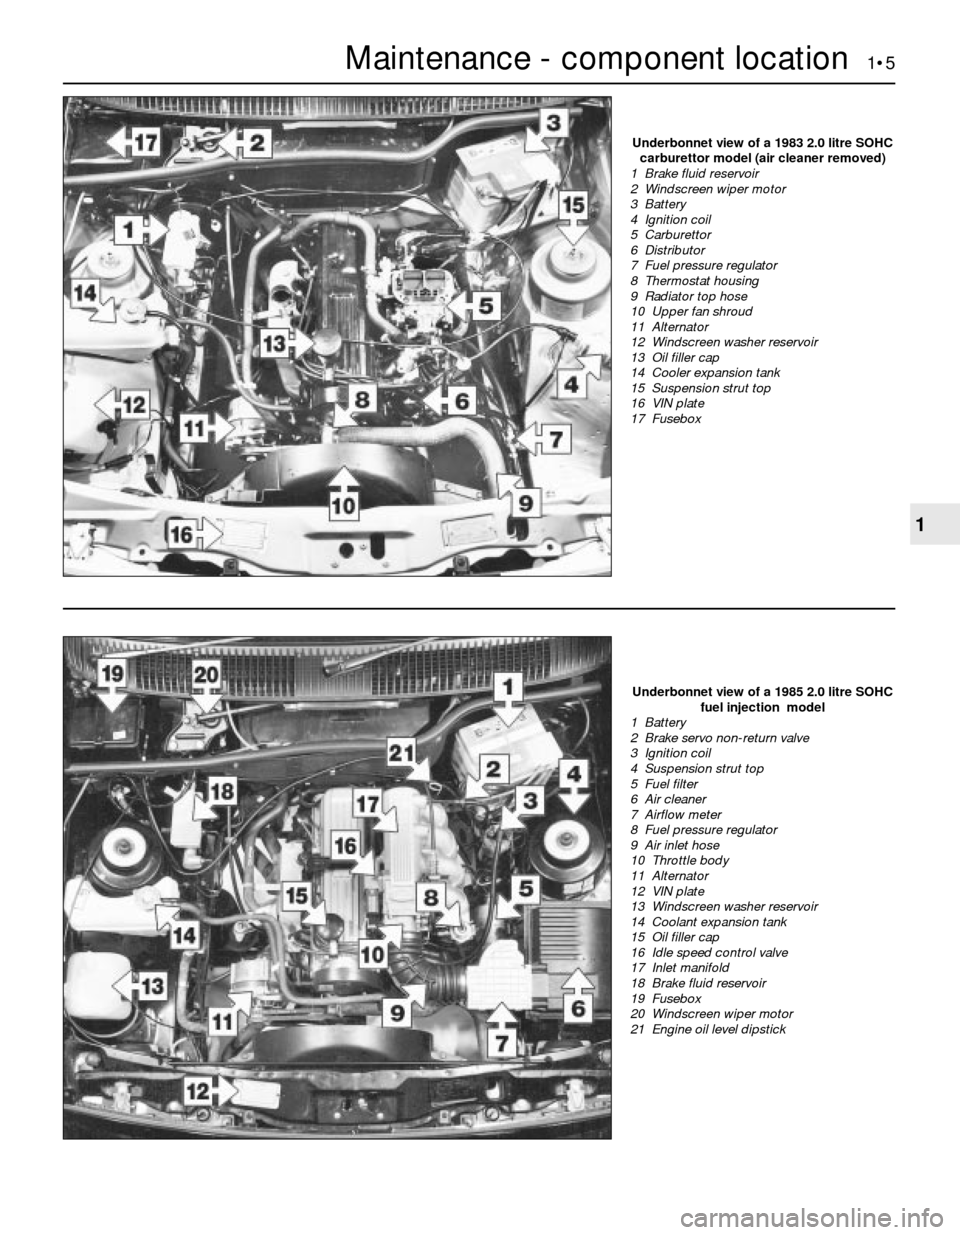 FORD SIERRA 1989 2.G Routine Manintenance And Servicing Workshop Manual Maintenance - component location  1•5
1
Underbonnet view of a 1985 2.0 litre SOHC
fuel injection  model
1  Battery
2  Brake servo non-return valve
3  Ignition coil
4  Suspension strut top
5  Fuel fi